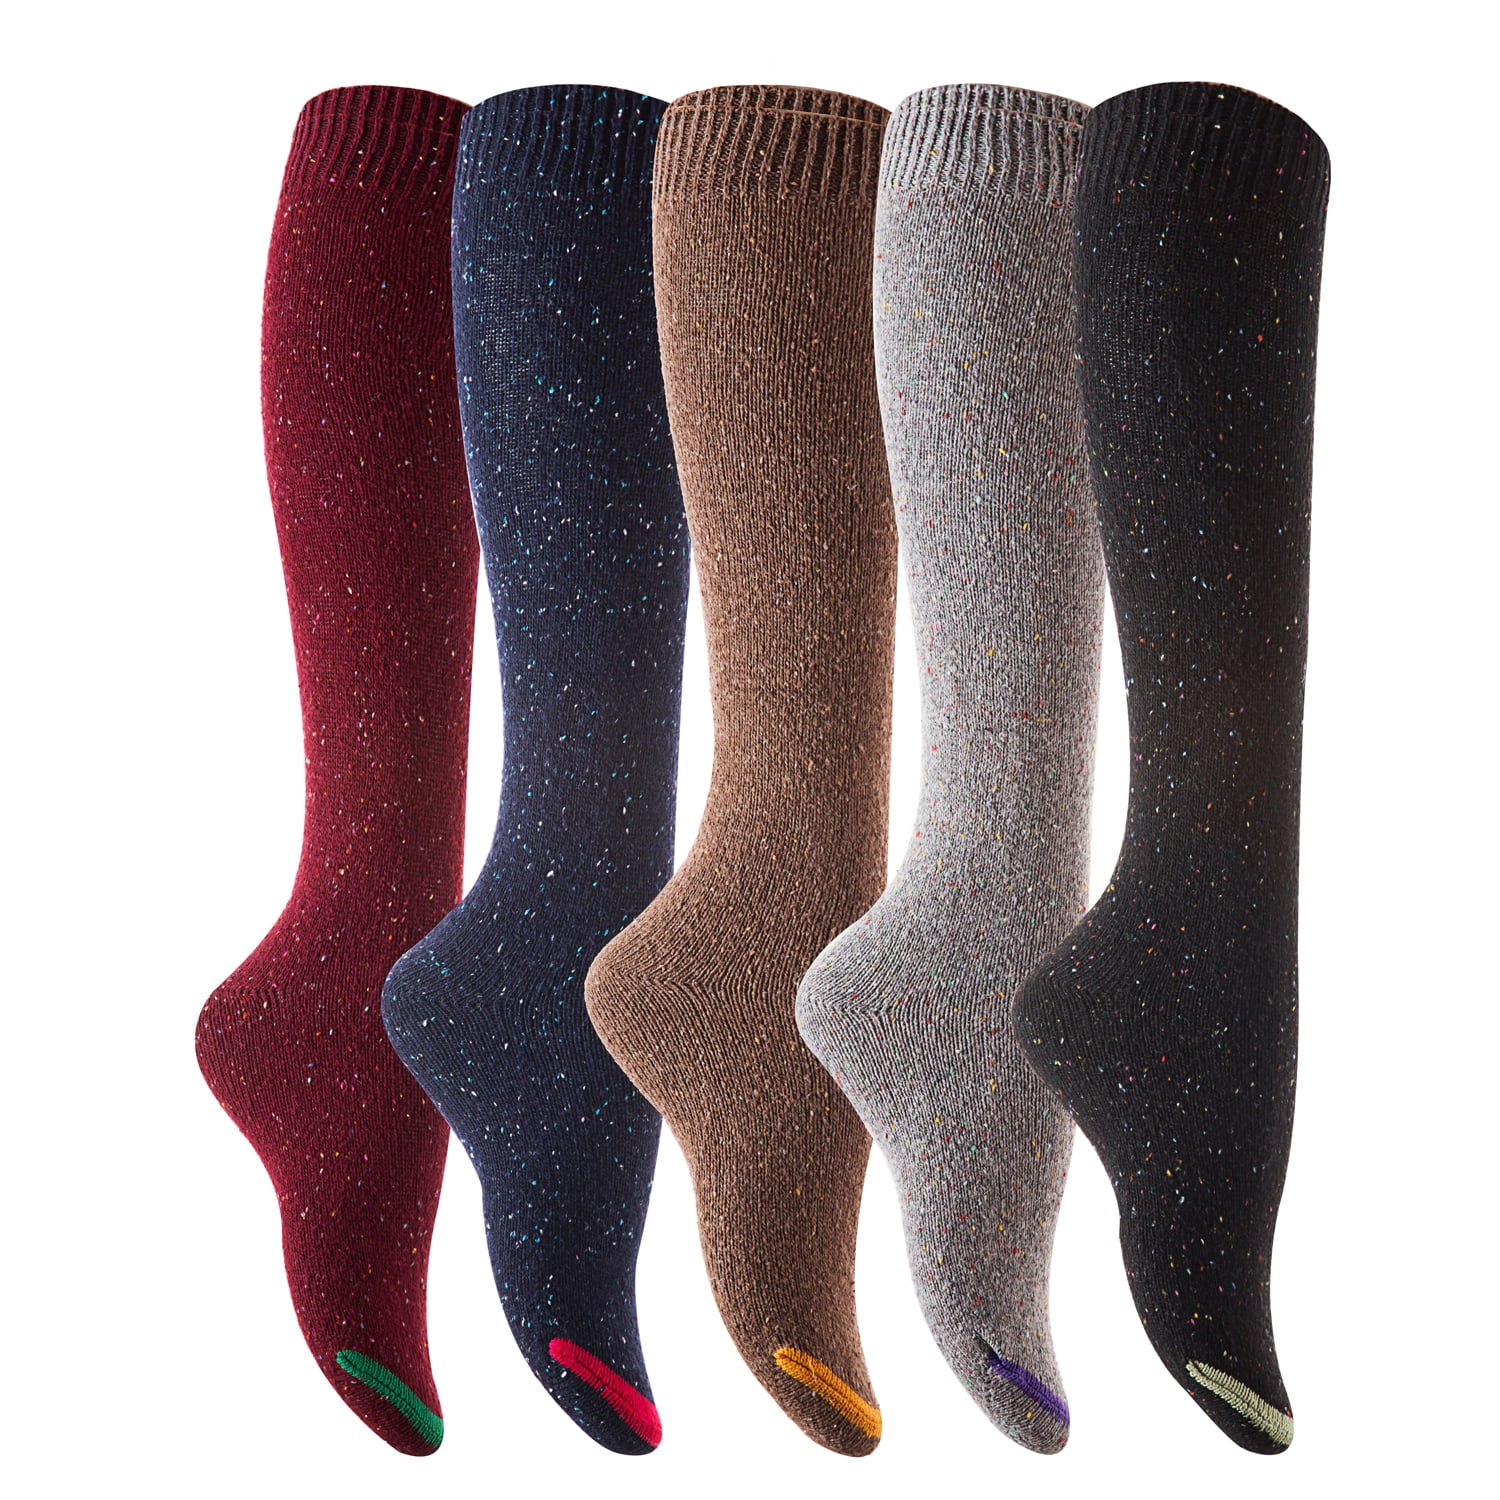 5Pairs Women Cotton Low Cut Athletic Toe Socks for EU35-39 